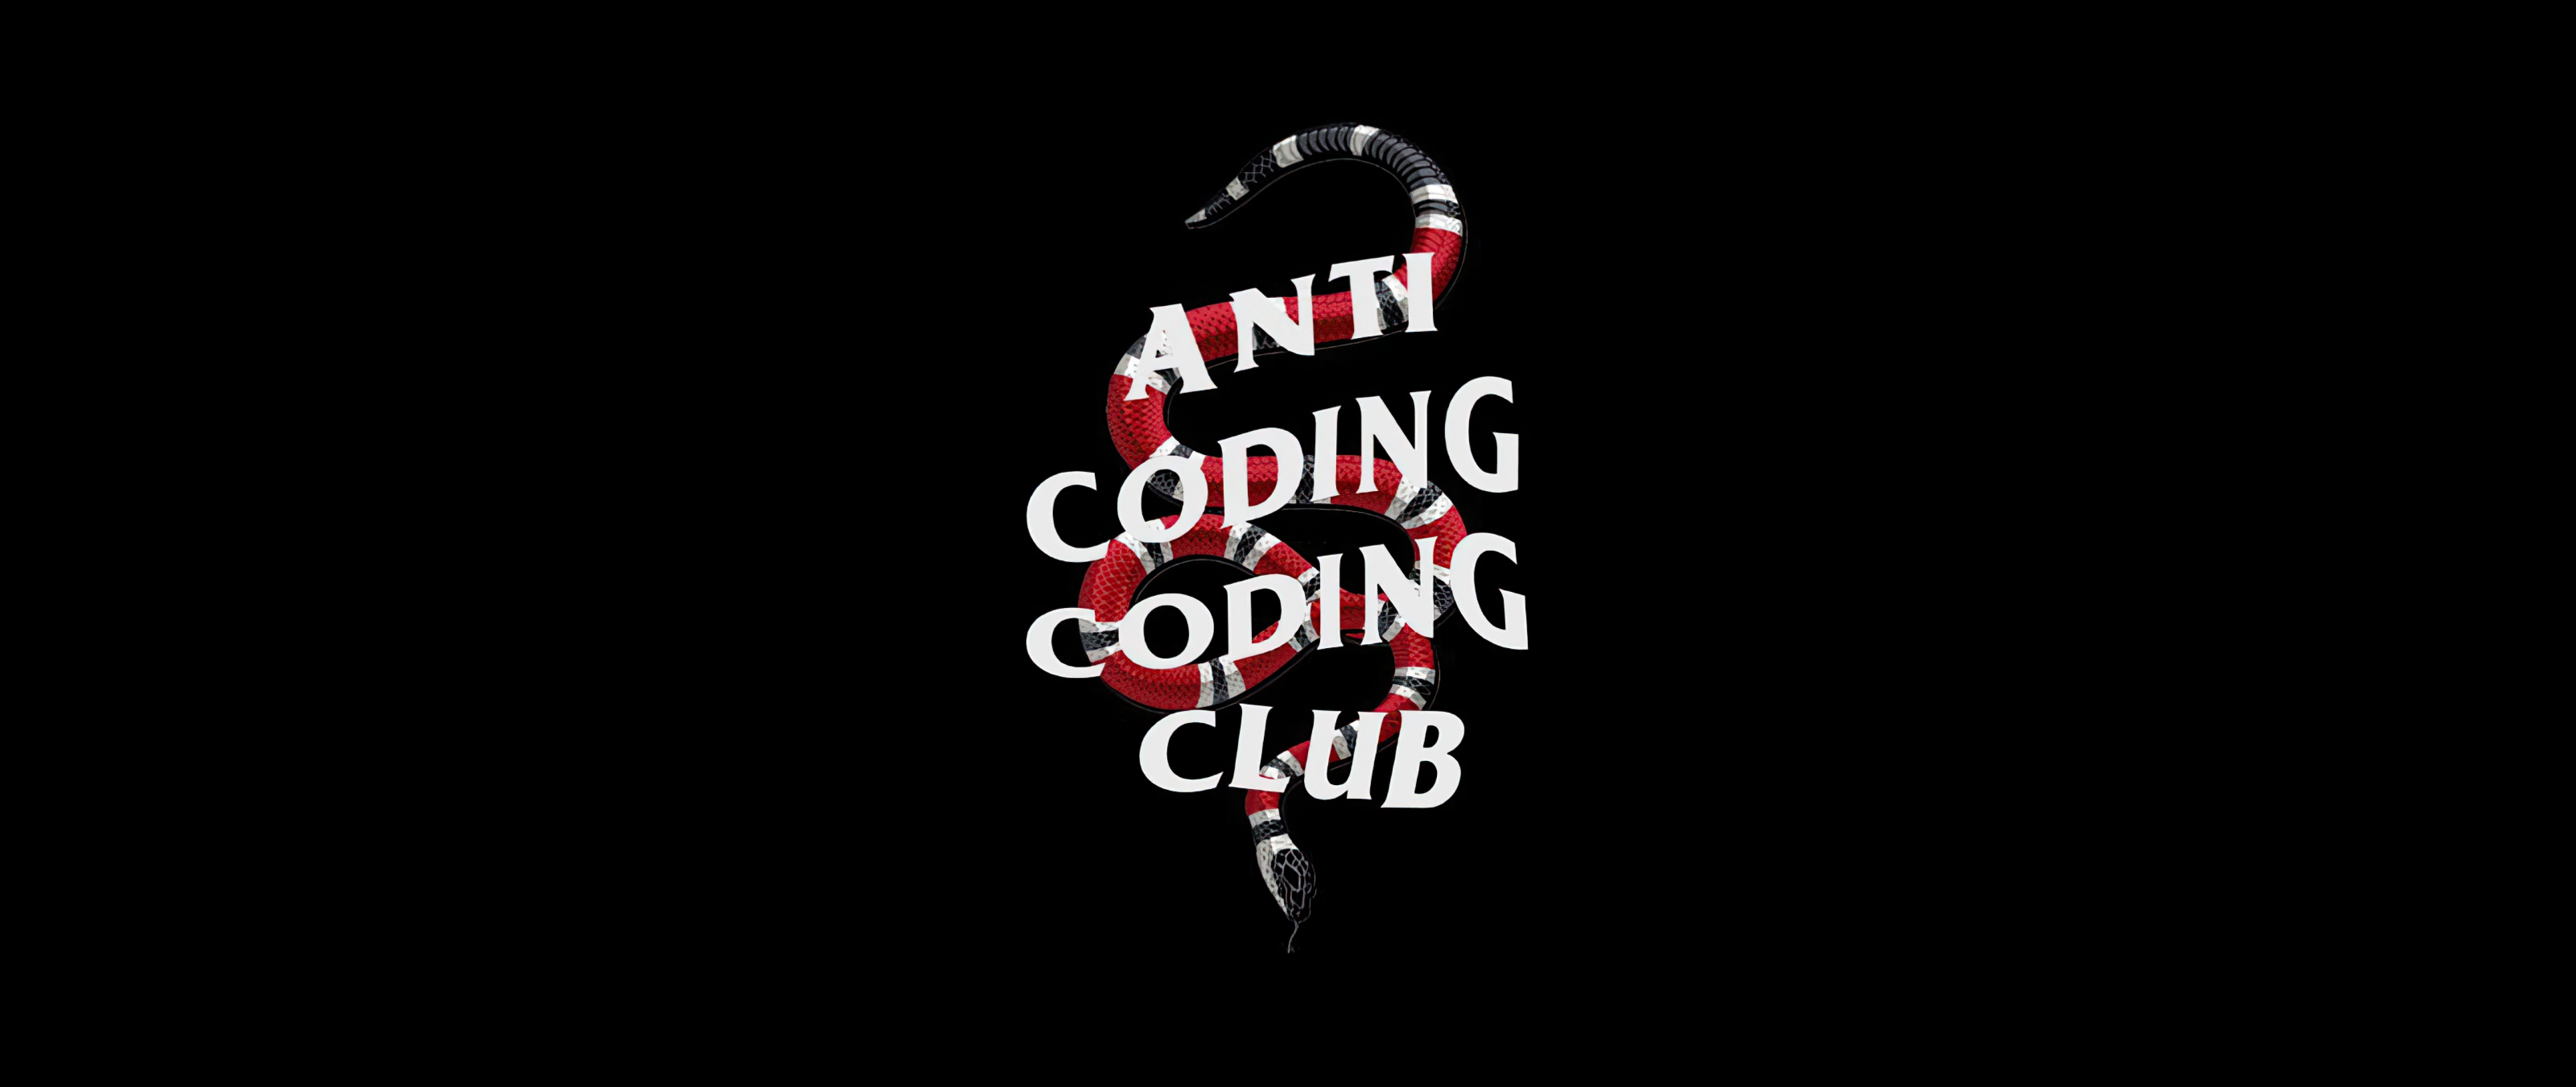 Anti Coding Coding Club 21:9 5120x2160